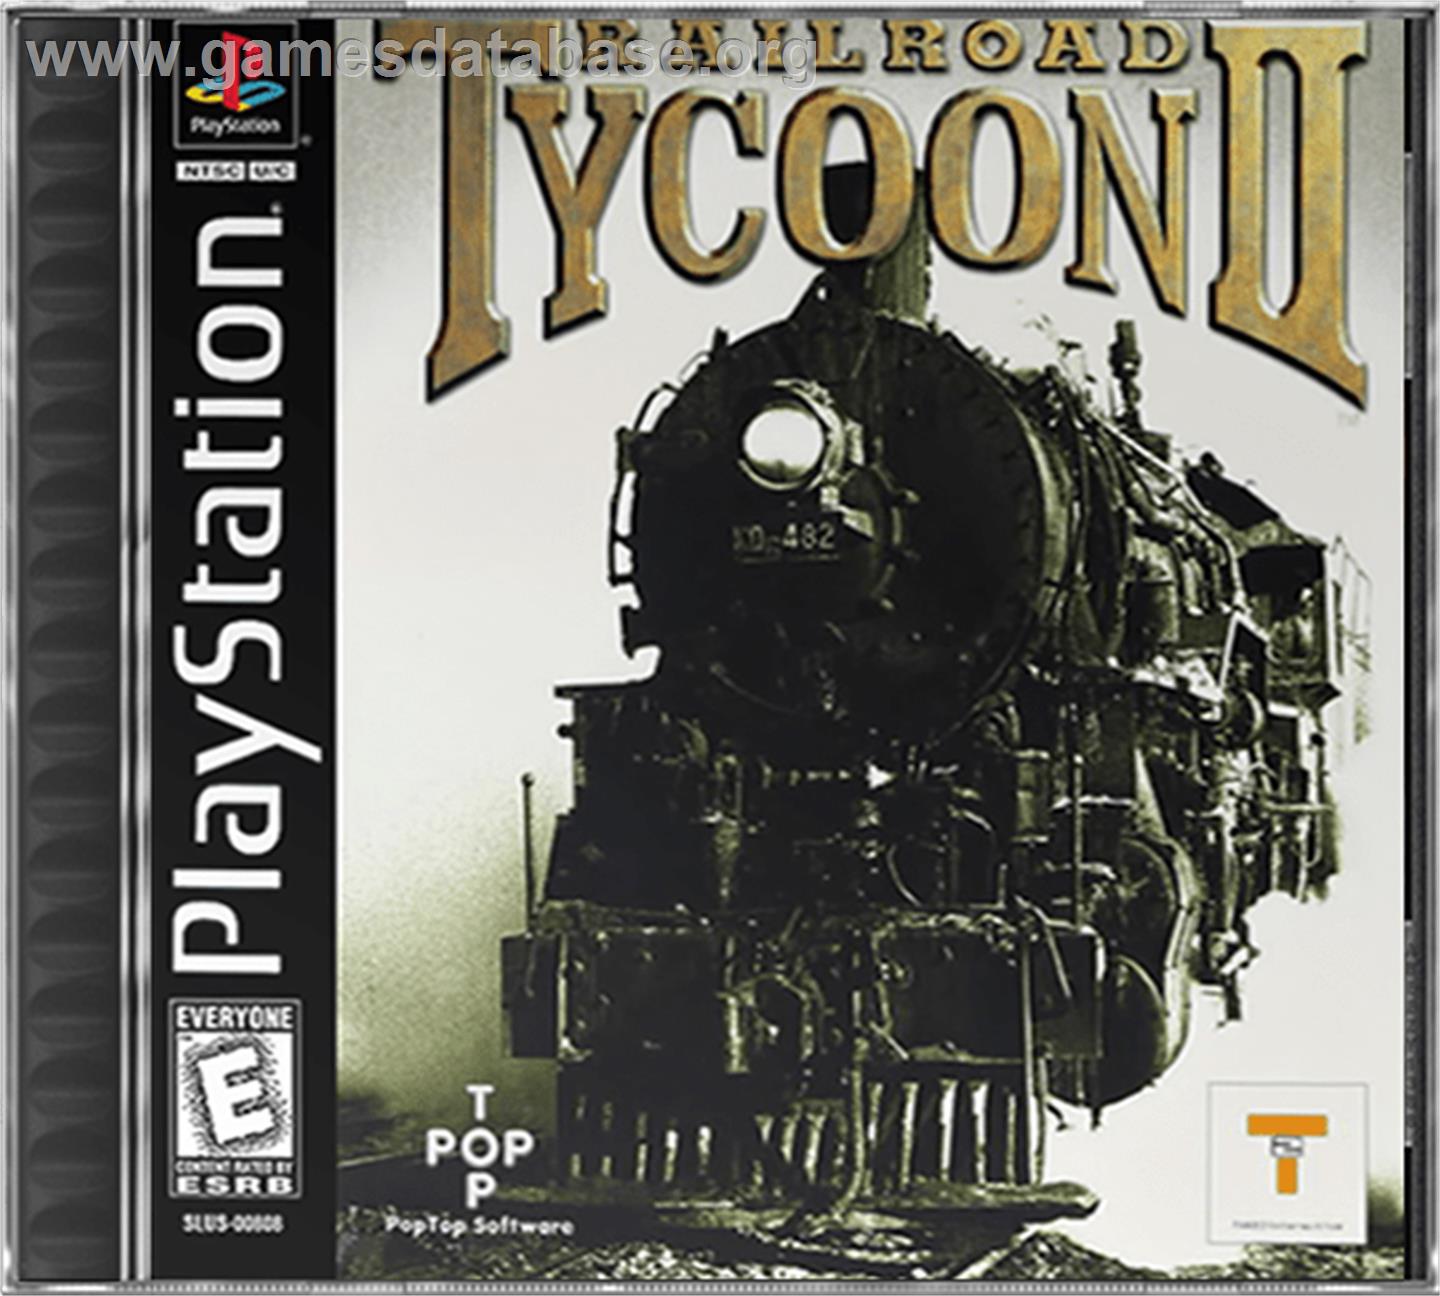 Railroad Tycoon II - Sony Playstation - Artwork - Box